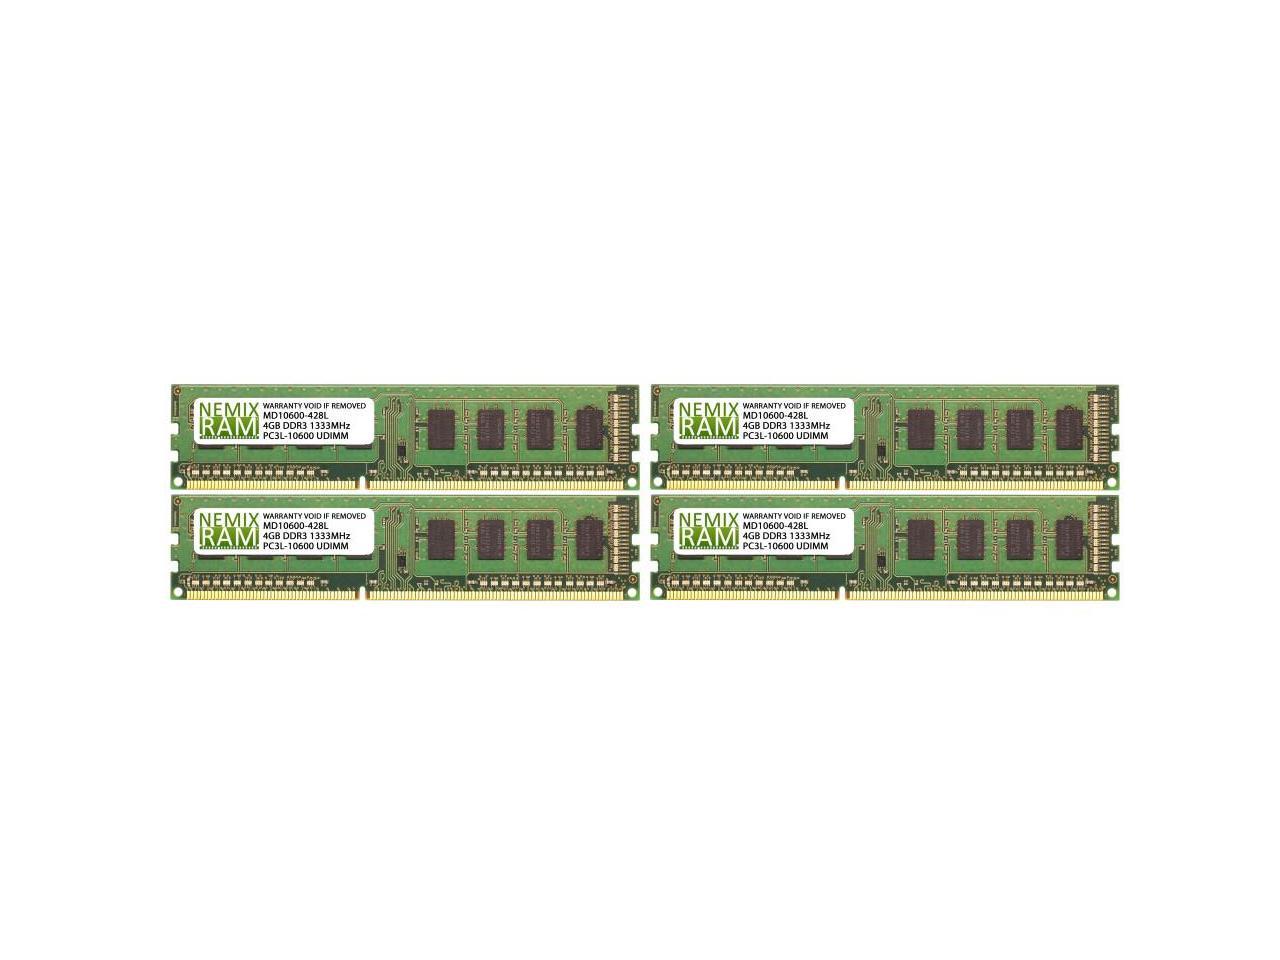 16GB (4x4GB) DDR3 1333 (PC3 10600) Desktop Memory Module - Newegg.com